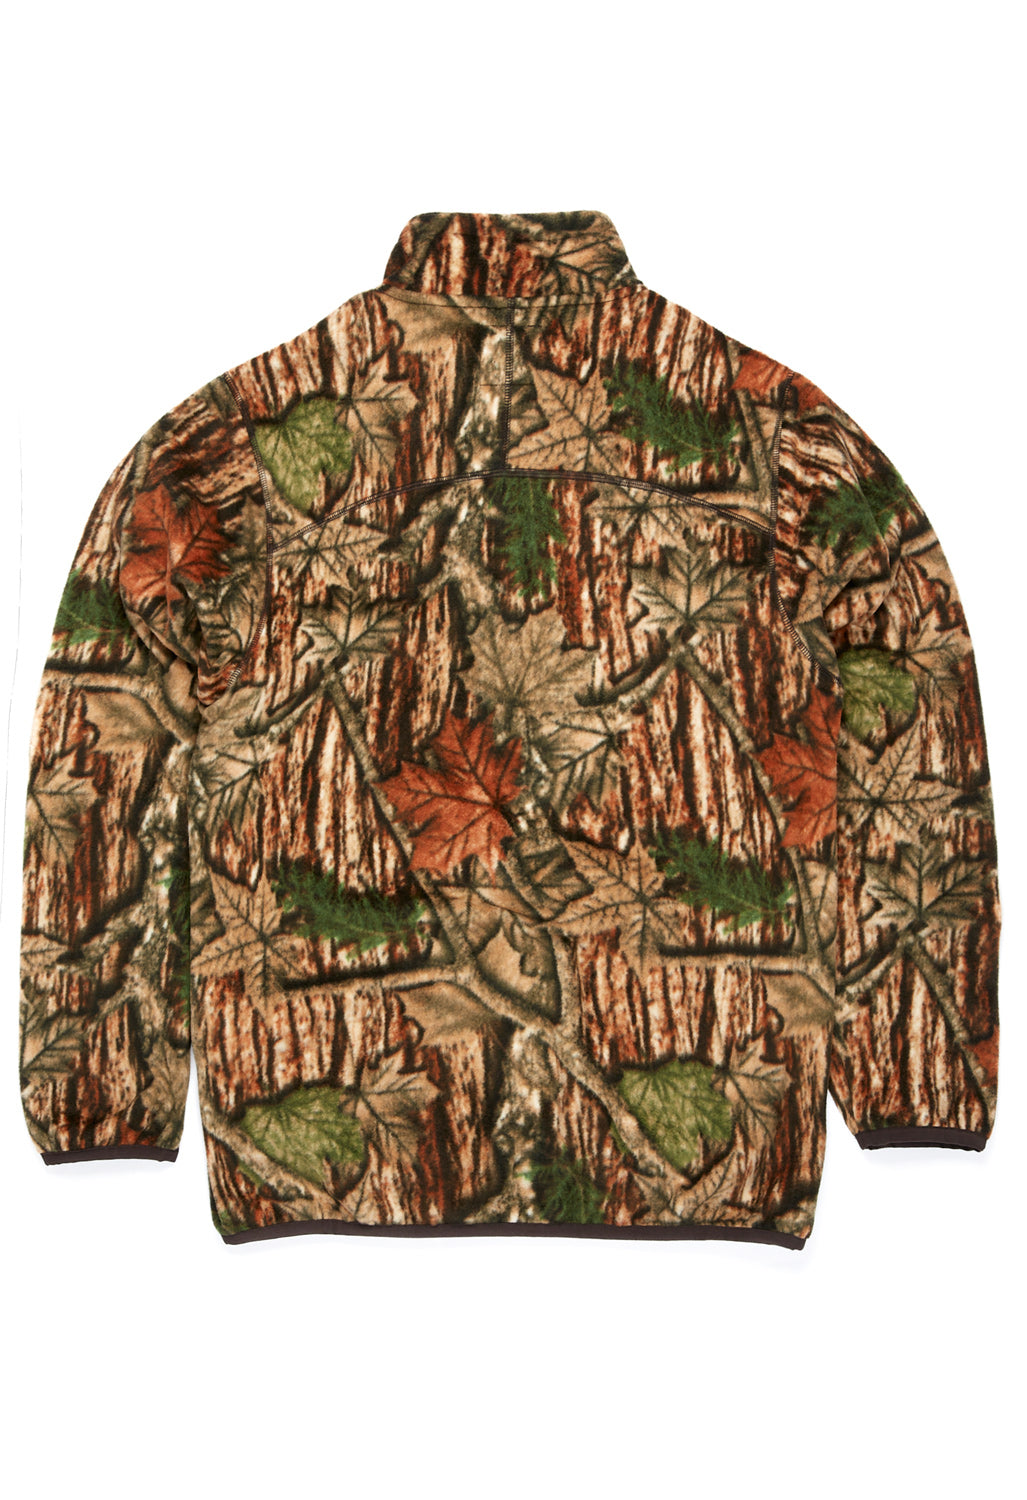 Gramicci Thermal Fleece Jacket - Leaf Camo – Outsiders Store UK